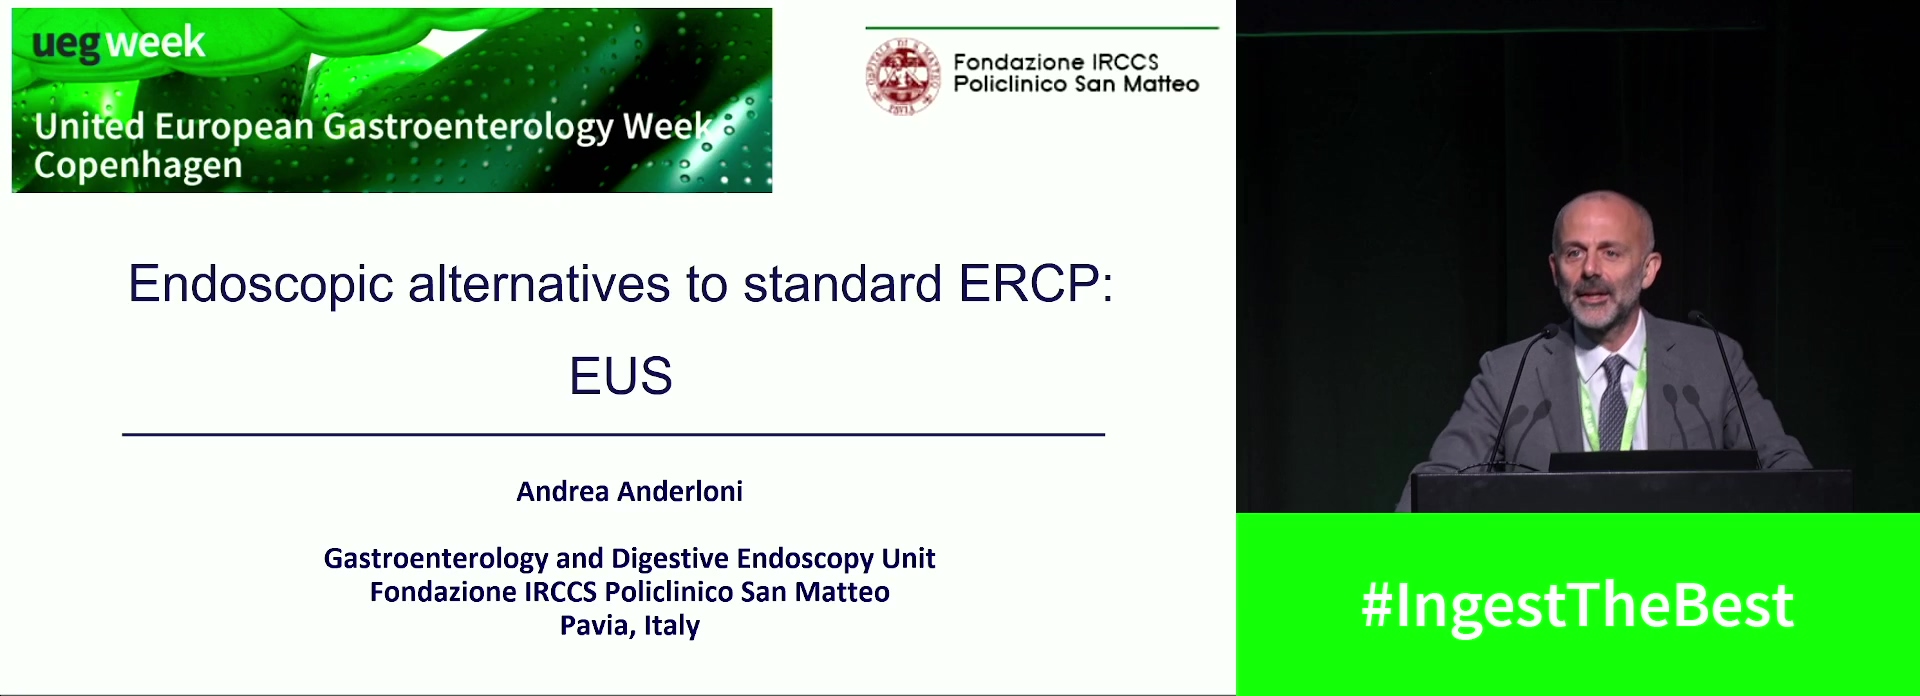 Endoscopic alternatives to standard ERCP: EUS